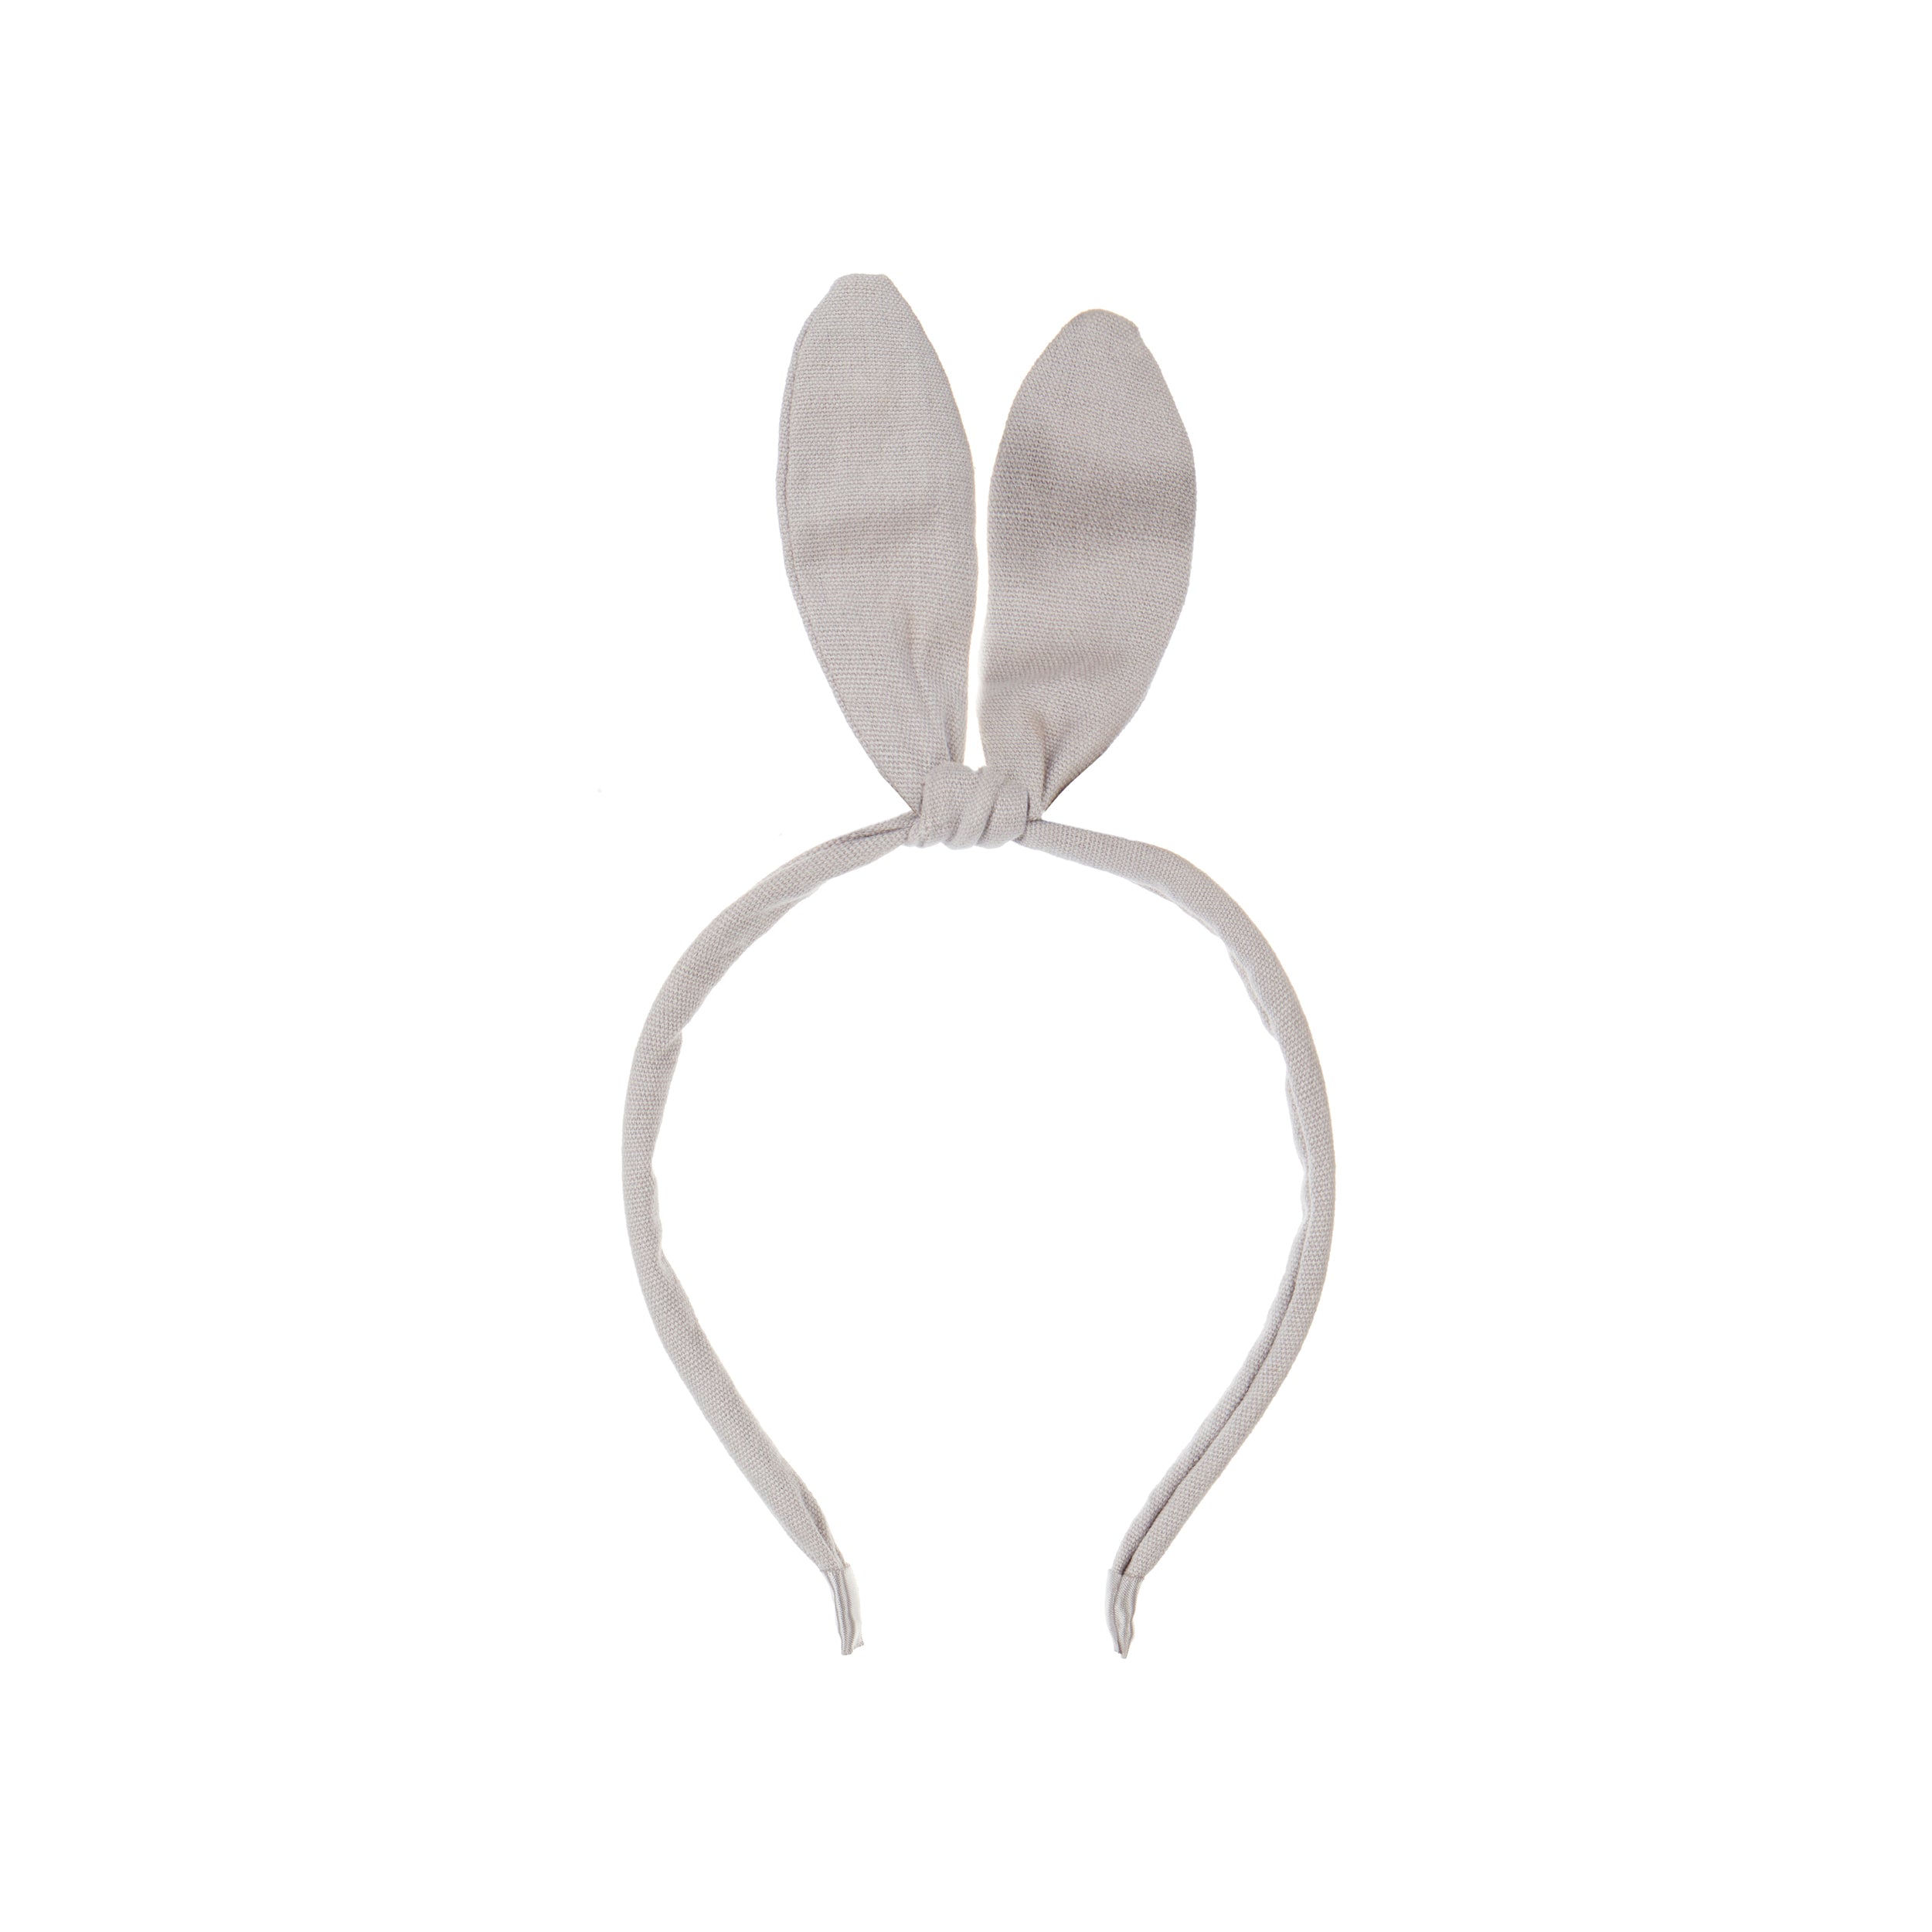 Linen Bunny Ears